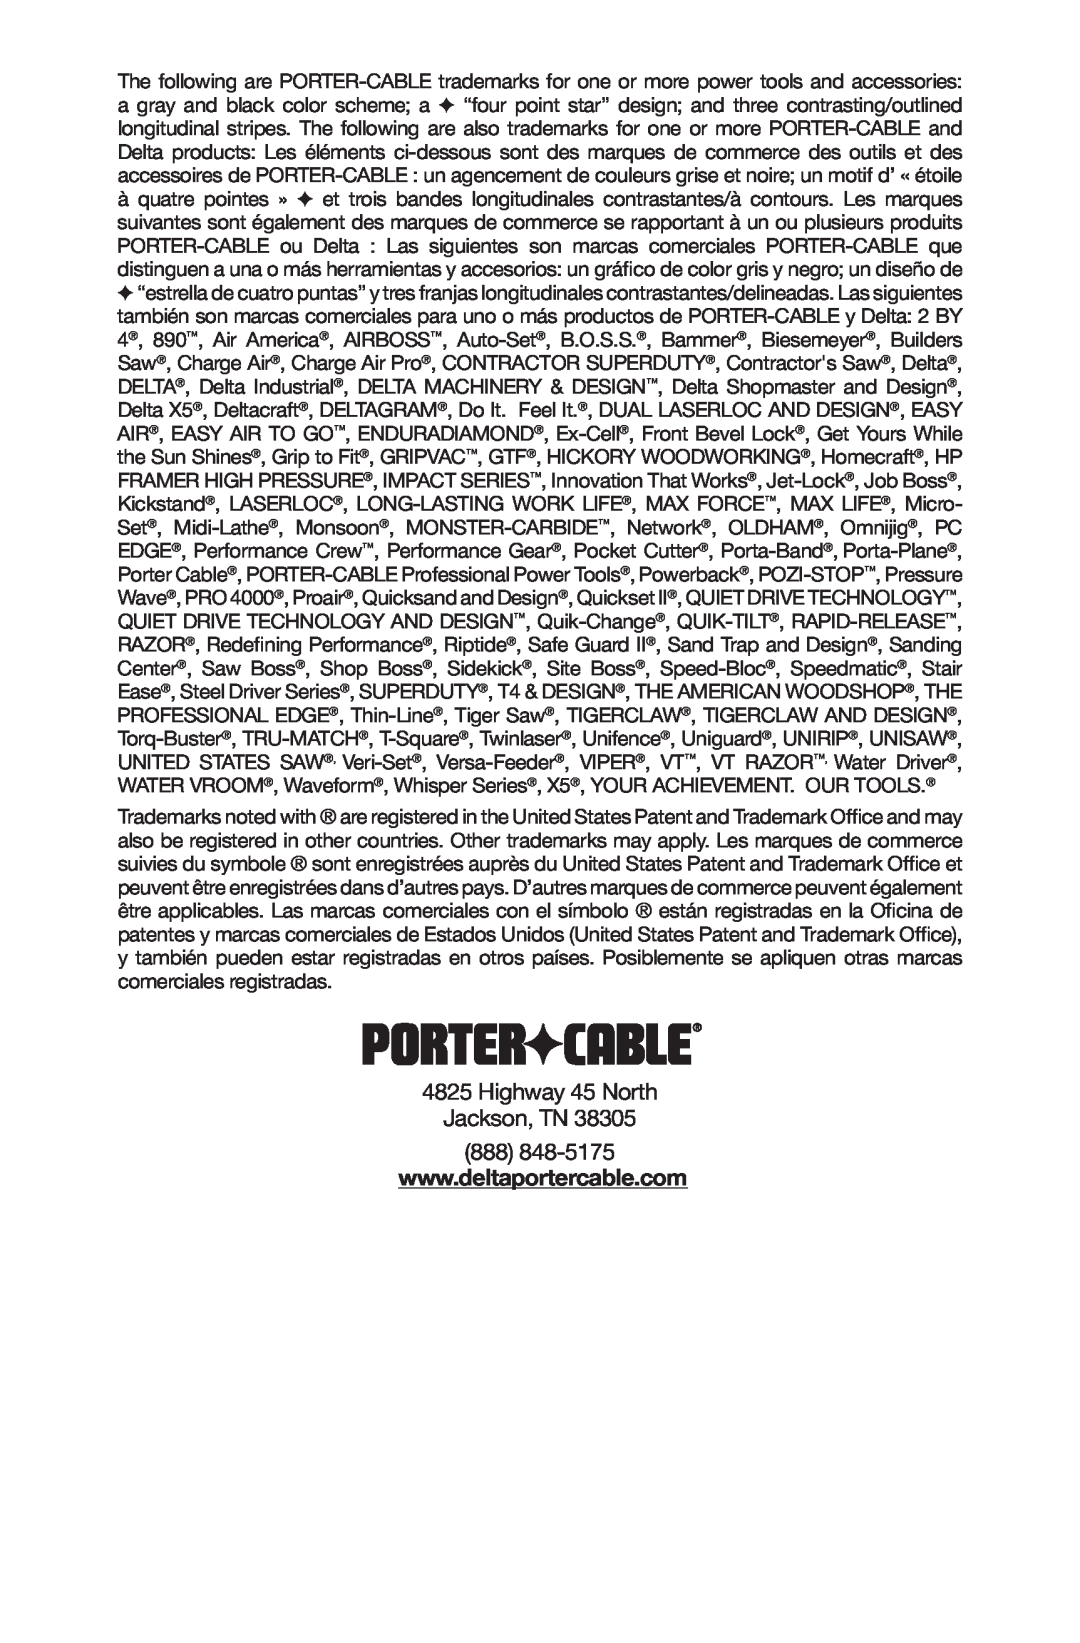 Porter-Cable N020206-NOV08-0, C7501M instruction manual Highway 45 North Jackson, TN 888 